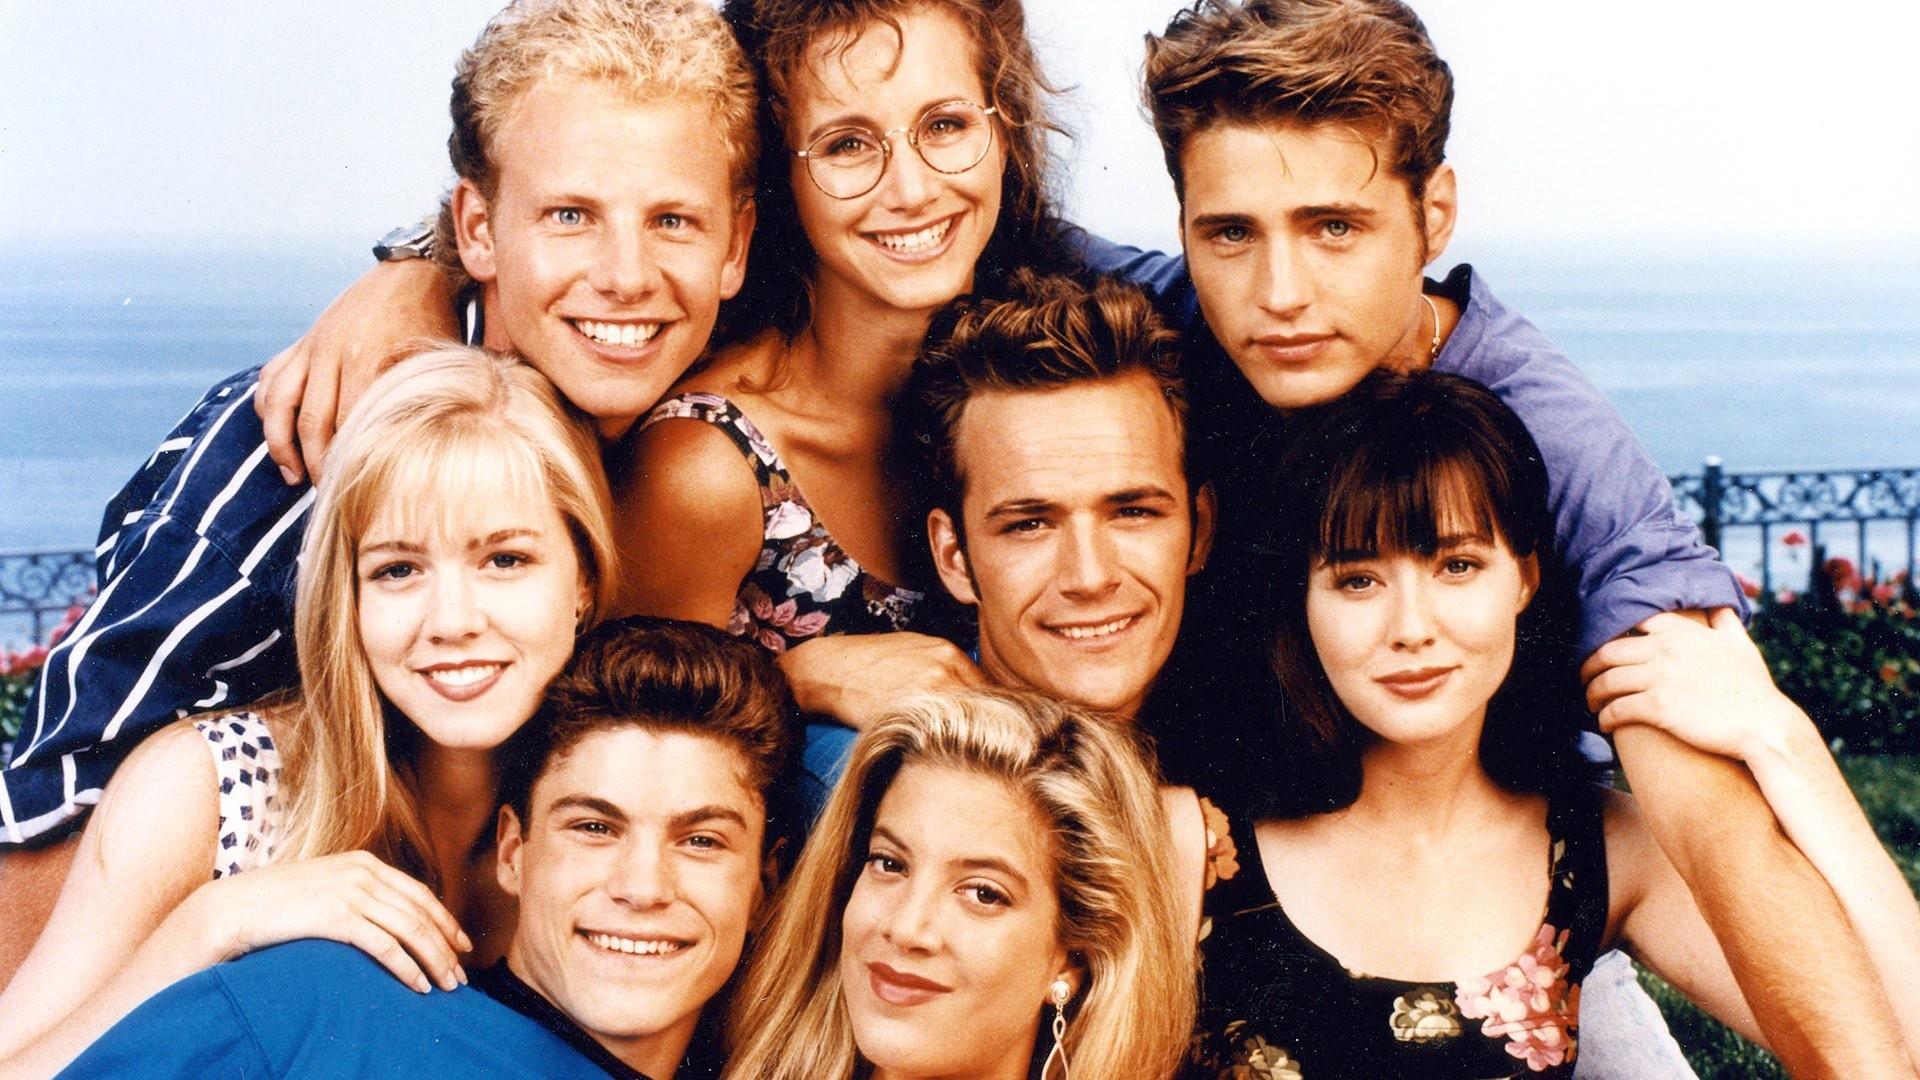 Беверли-Хиллз 90210 – 1 сезон 6 серия «Высший пилотаж» / Beverly Hills, 90210